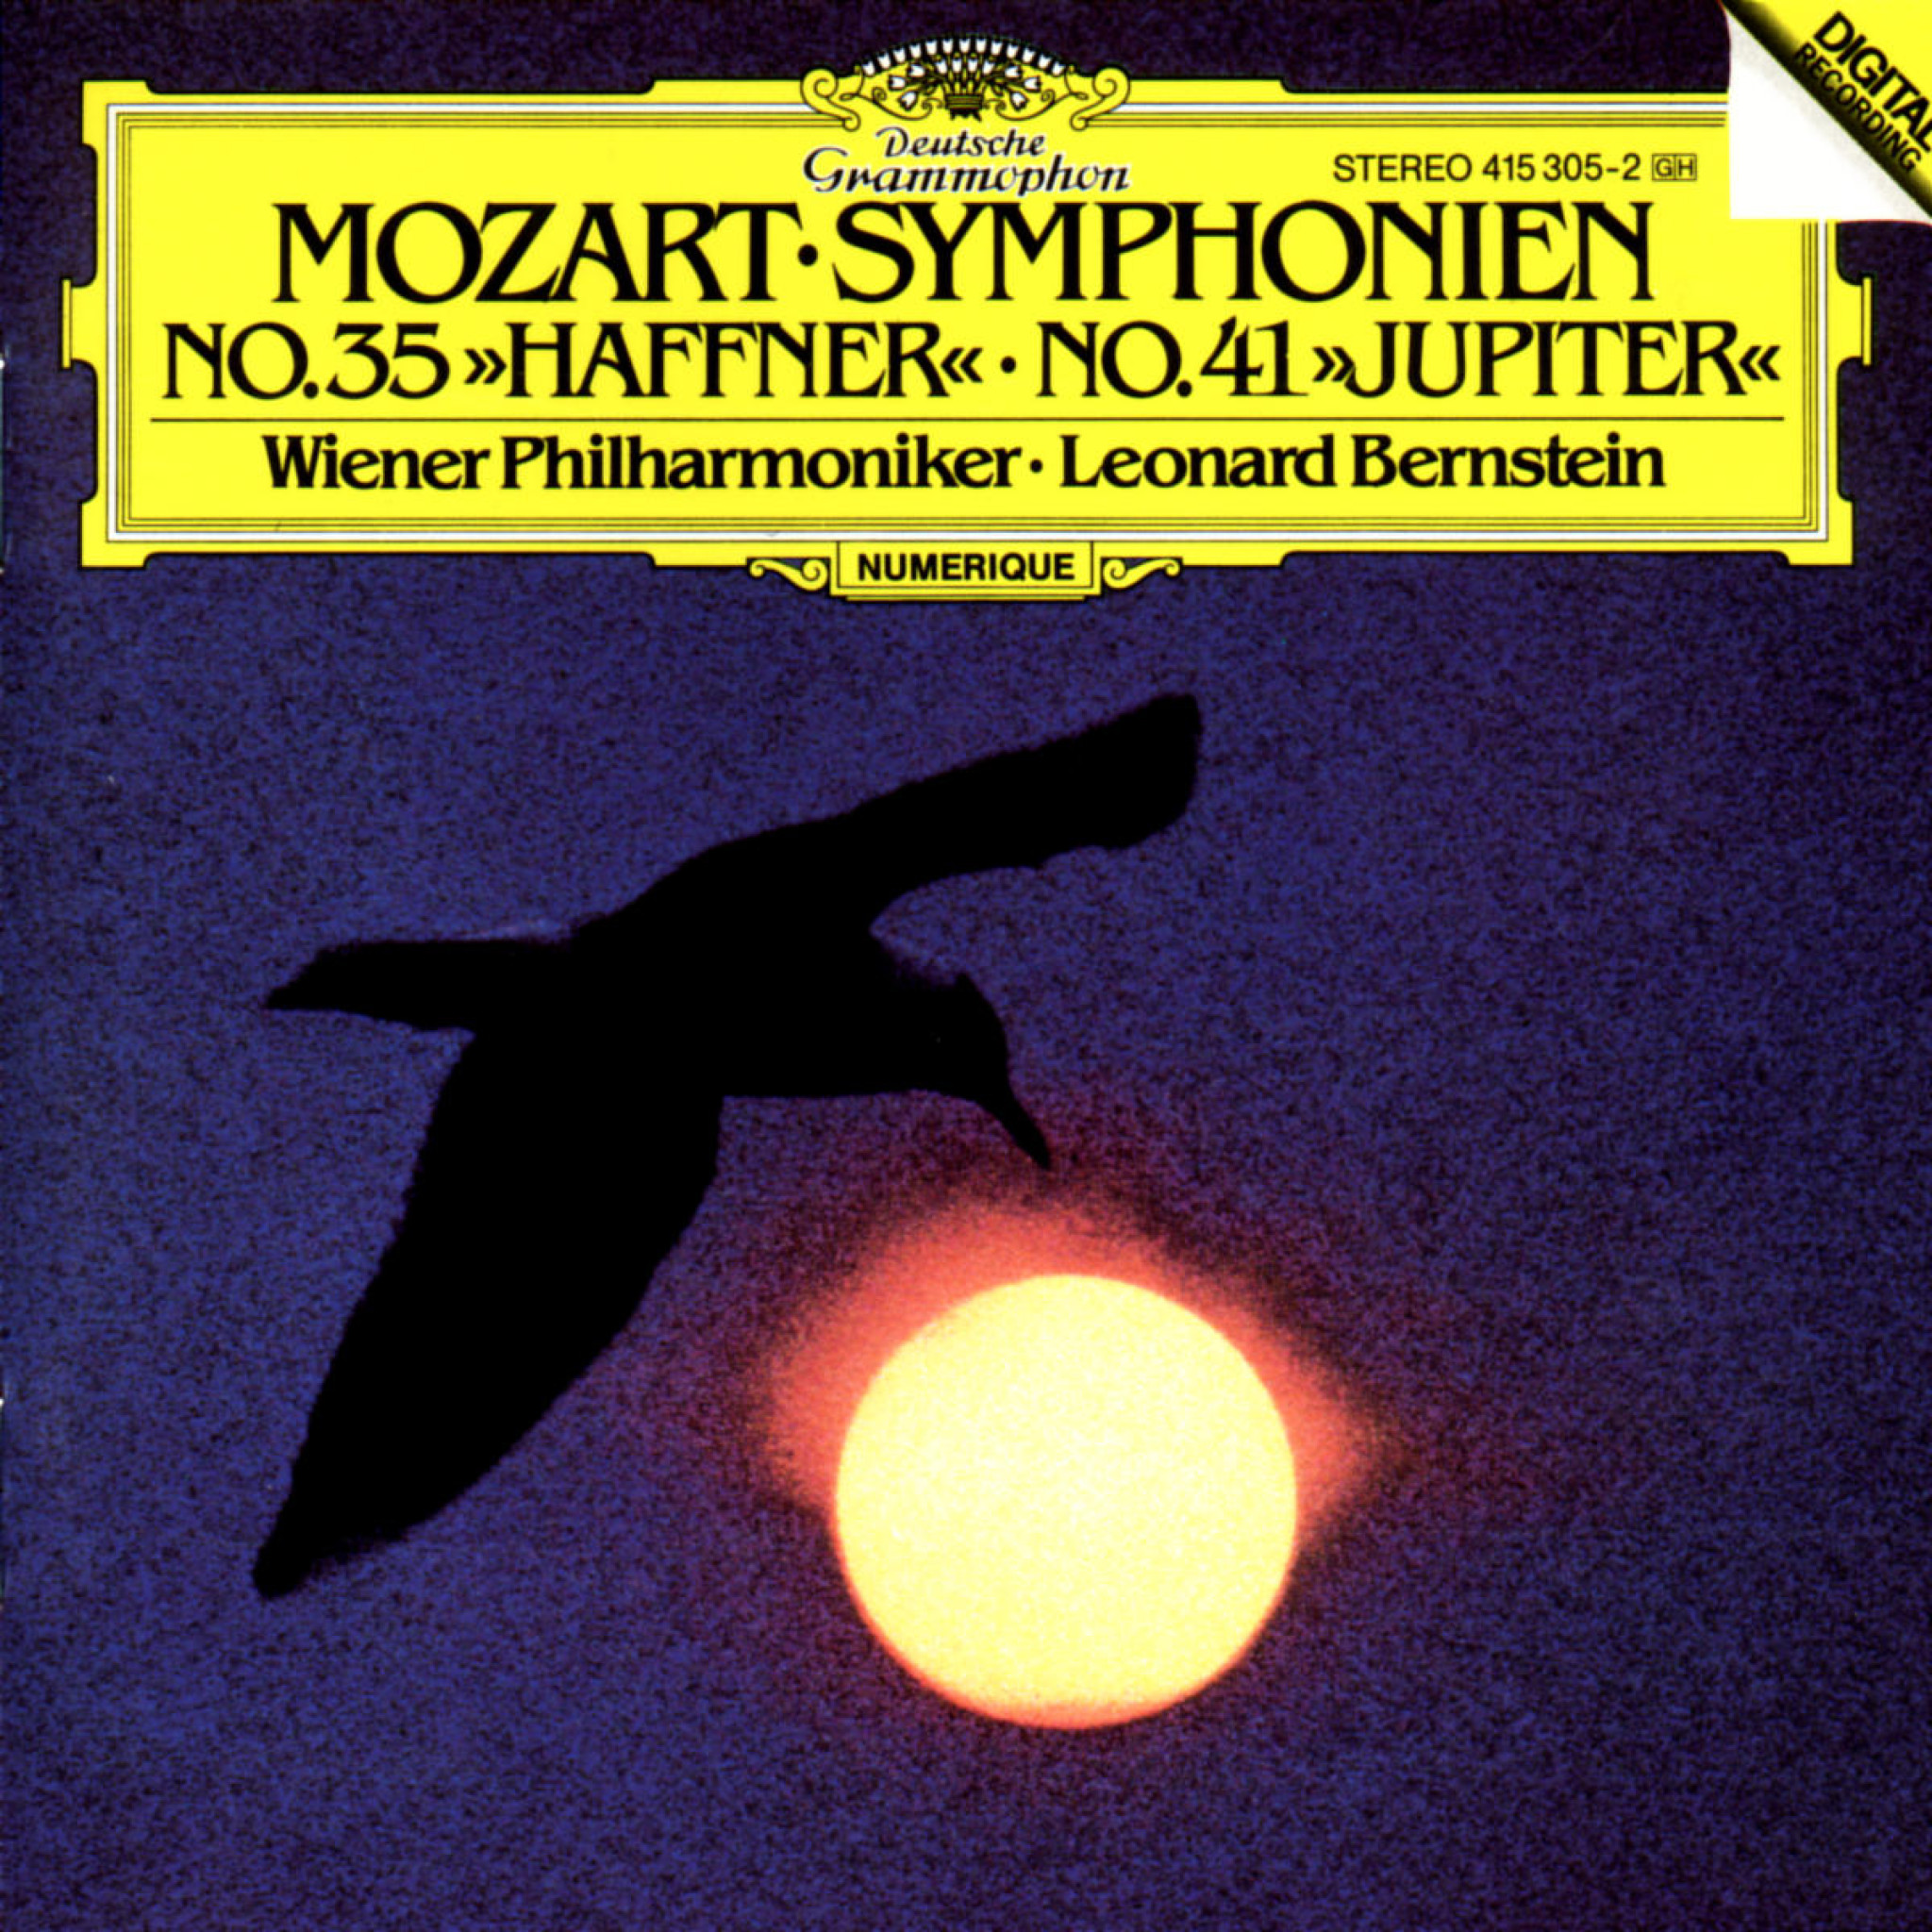 Mozart: Symphonies Nos.35 "Haffner" & 41 "Jupiter" 0028941530529